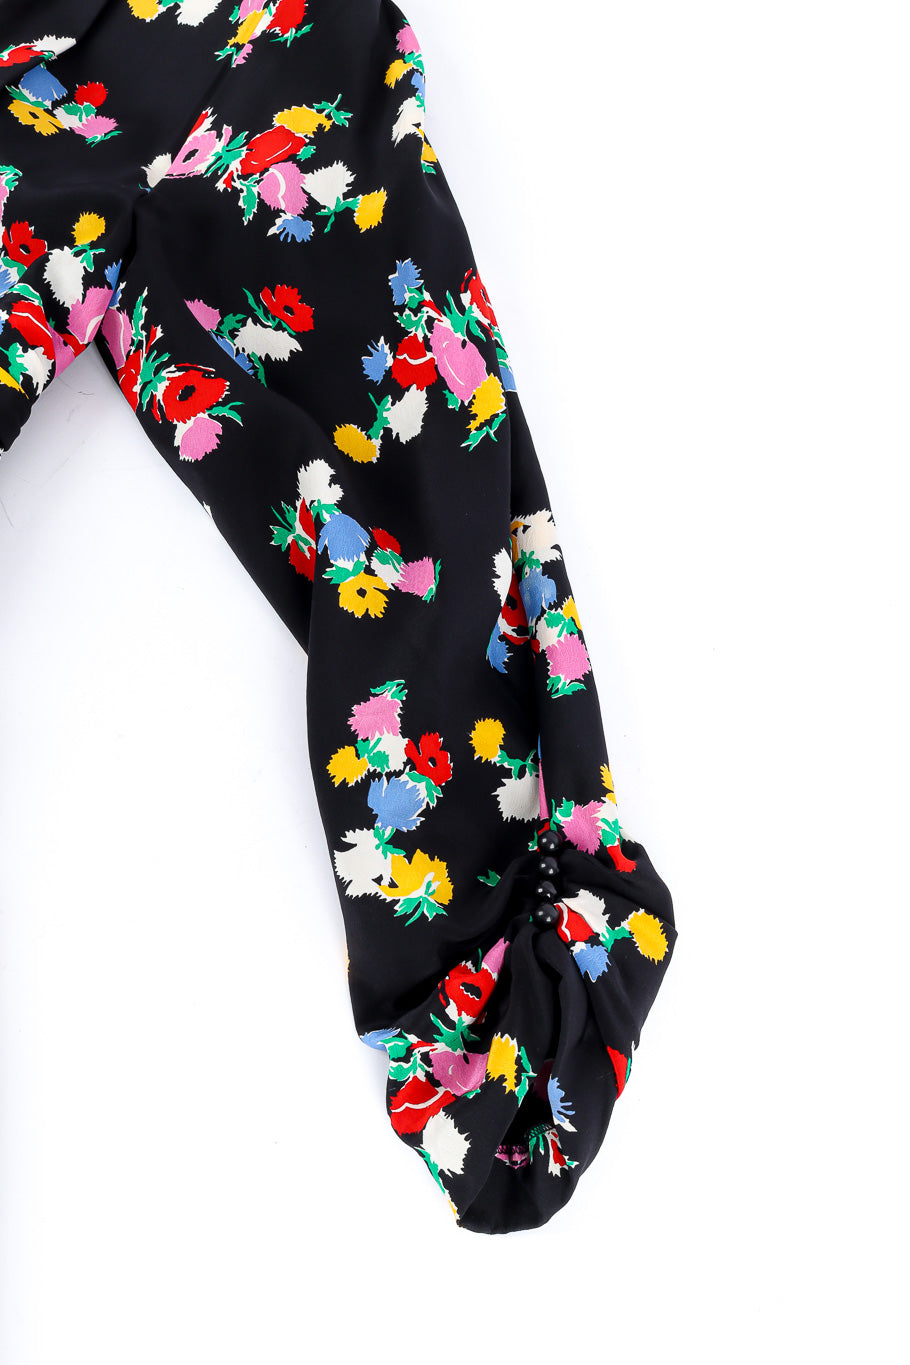 Nina Ricci silk floral print dress sleeve detail @recessla